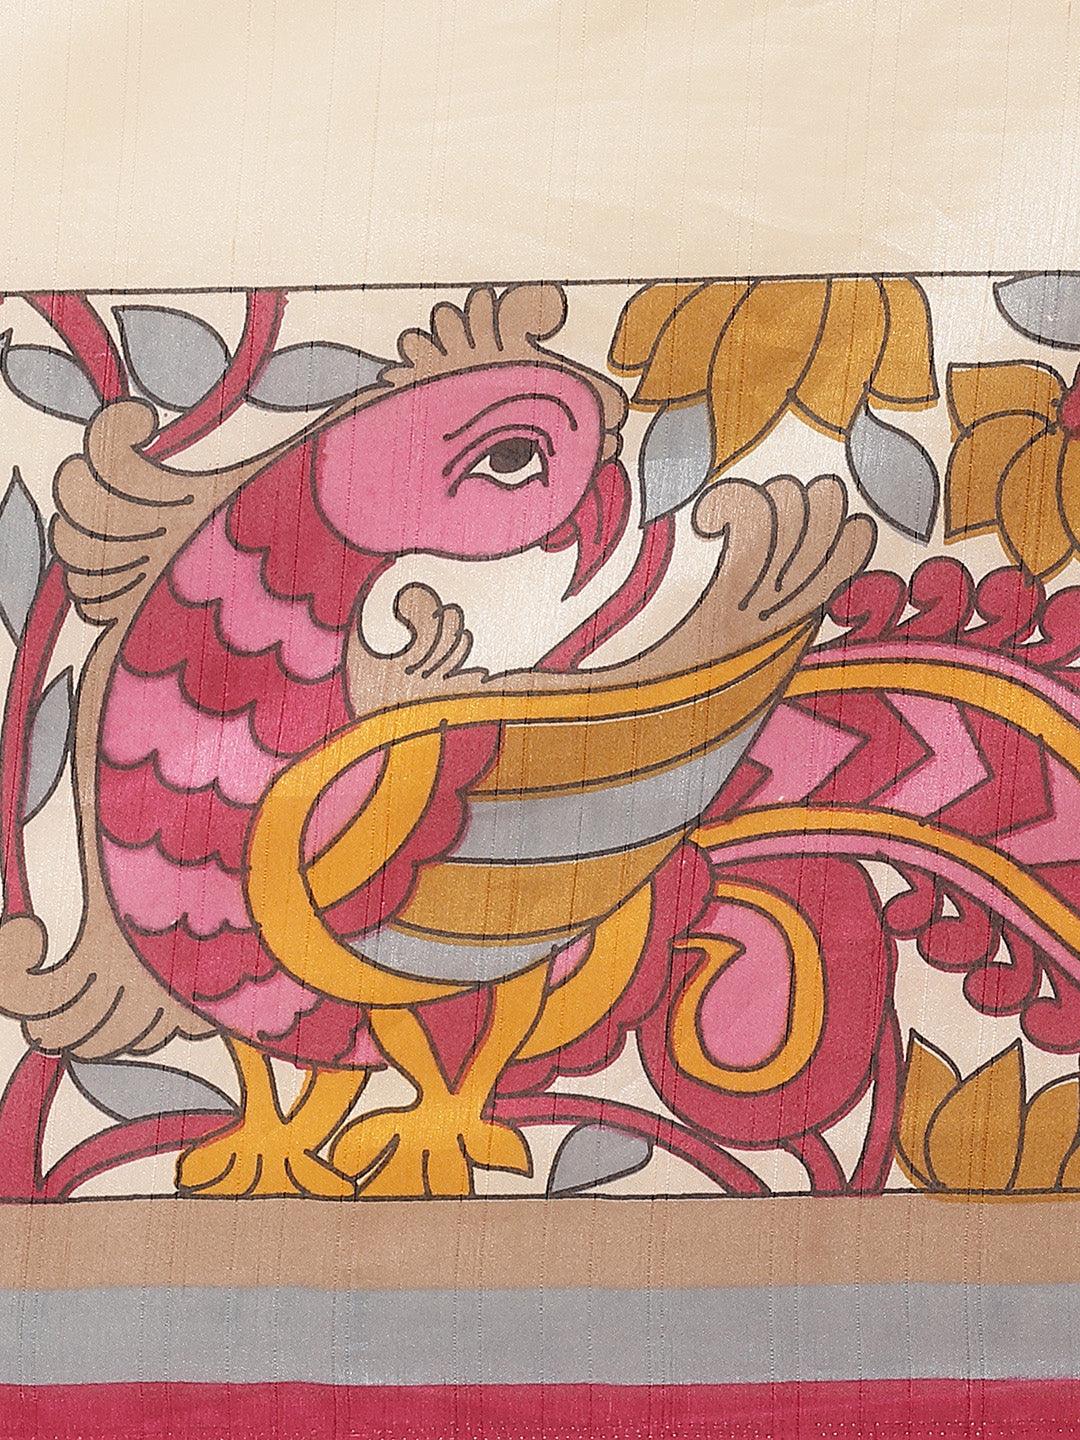 Beige Printed Silk Blend Saree - Libas